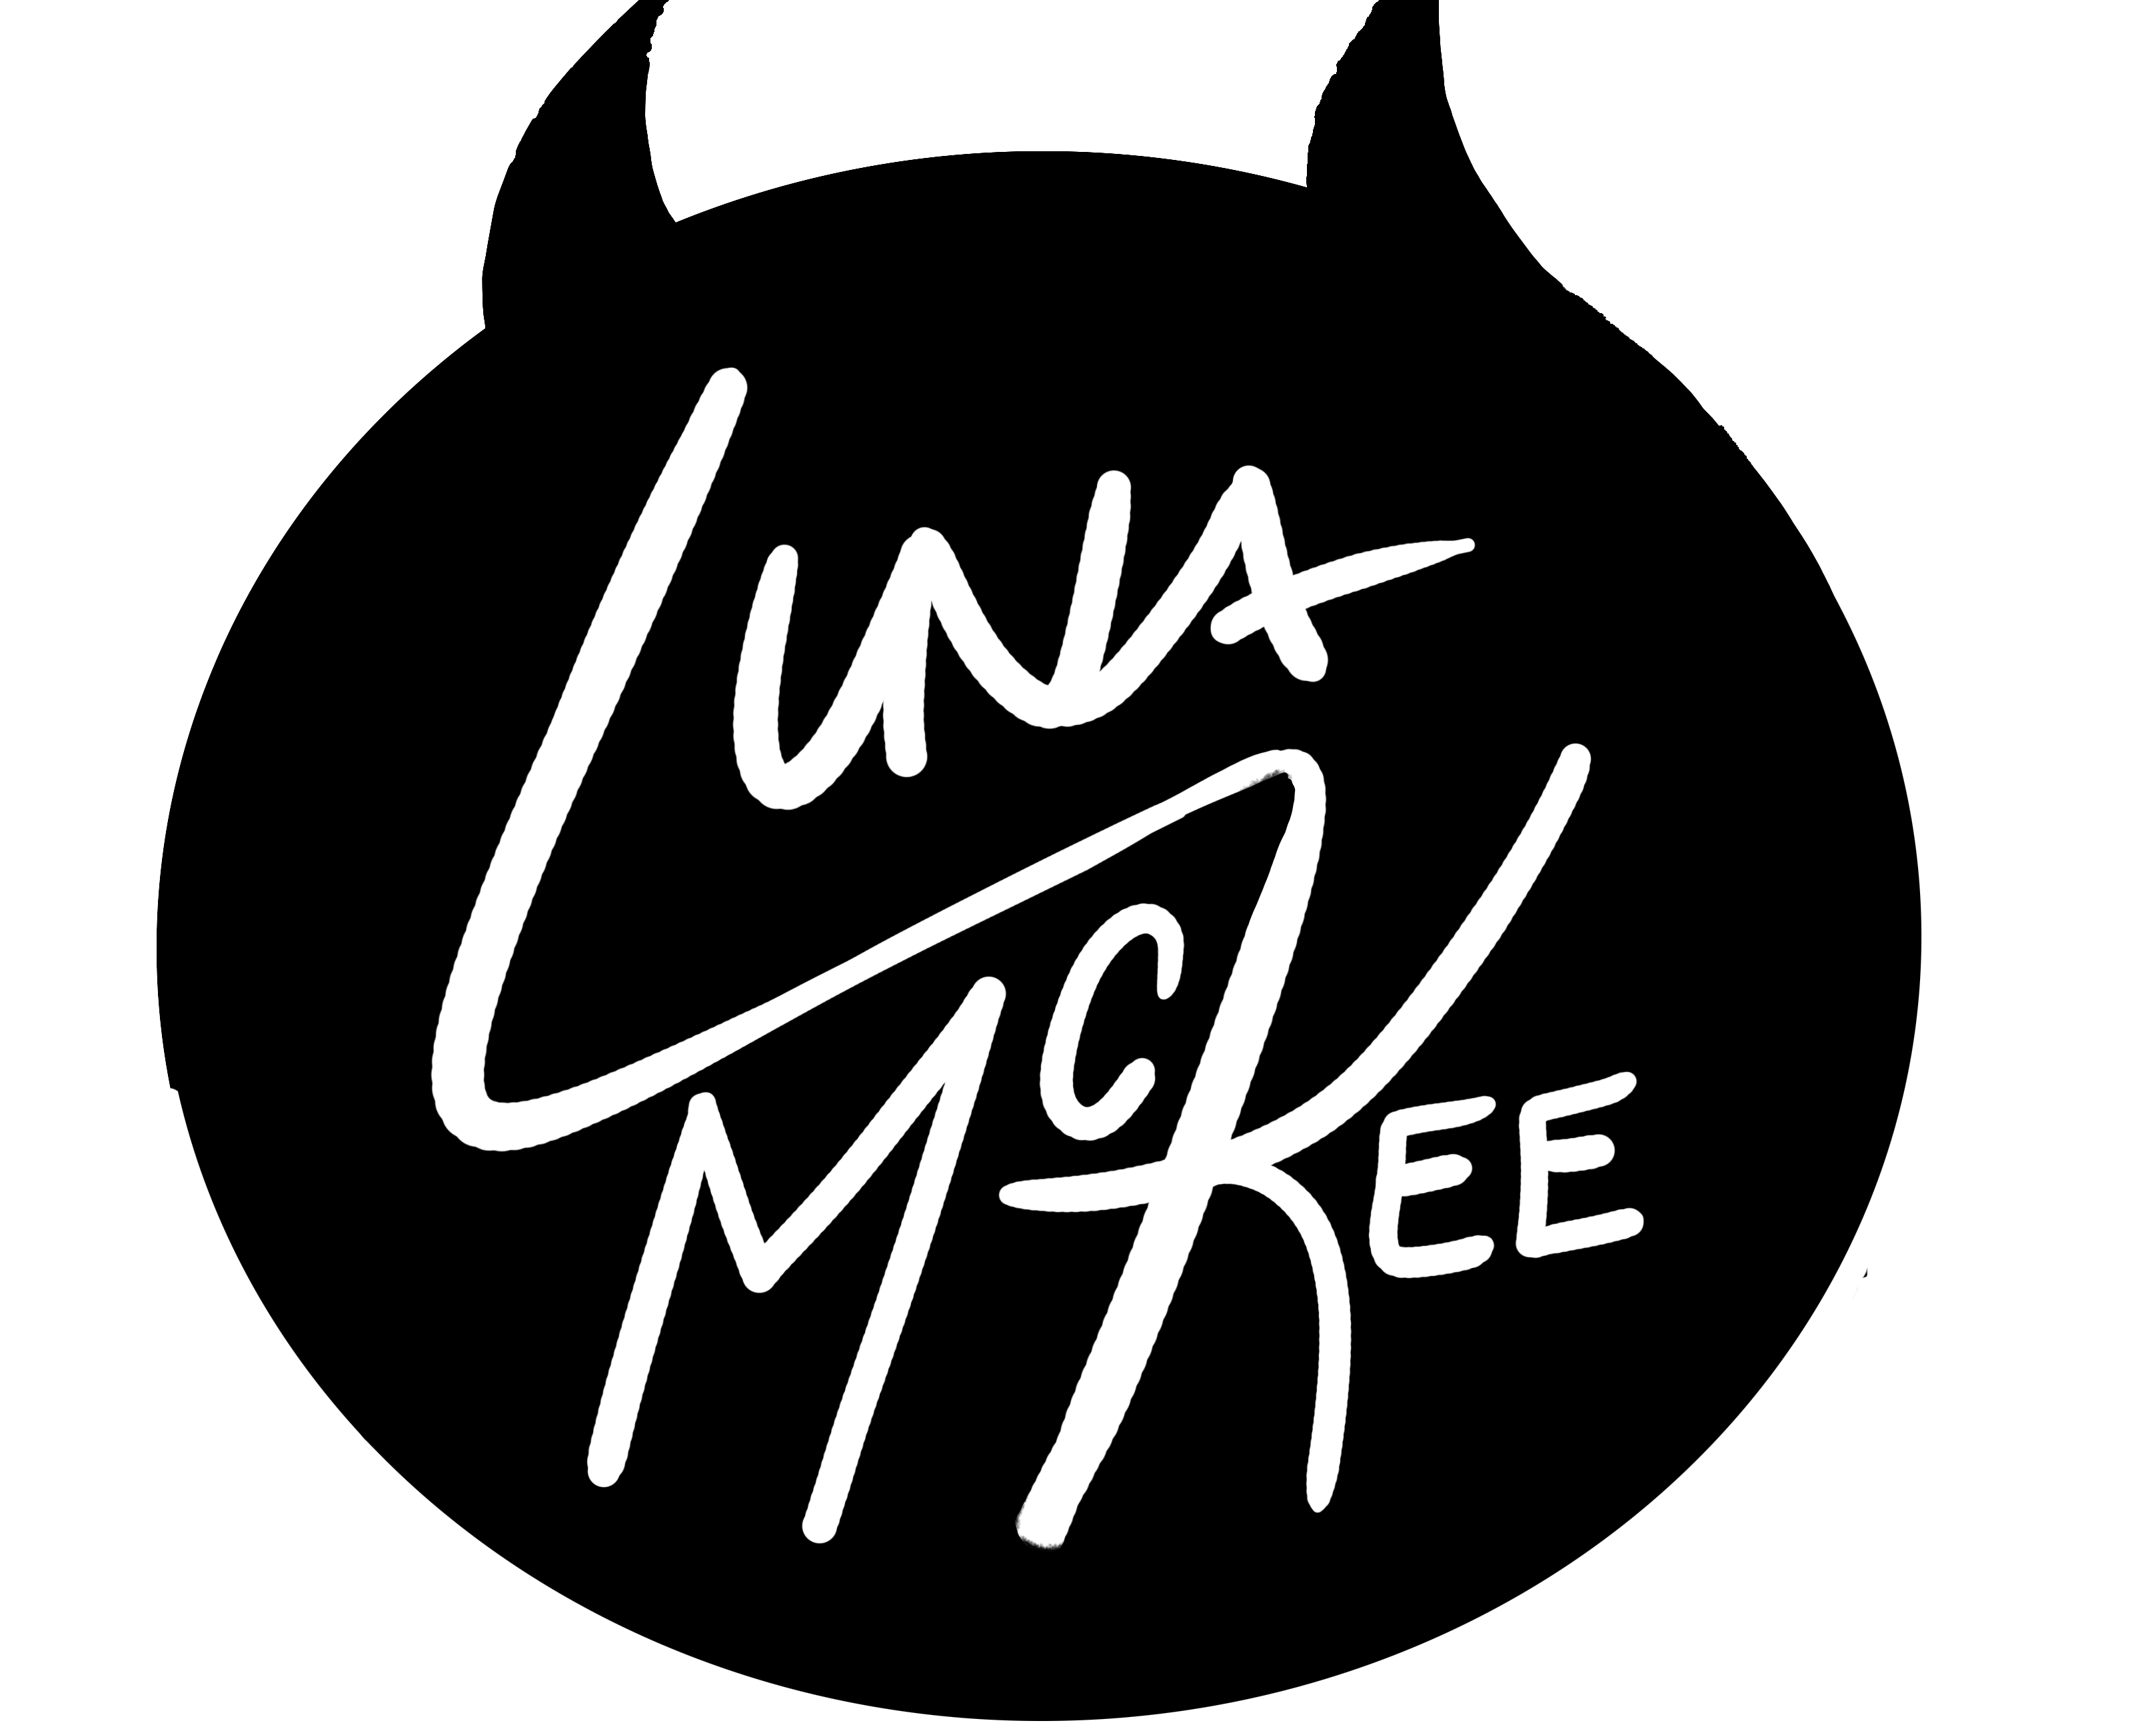 Luna McKee